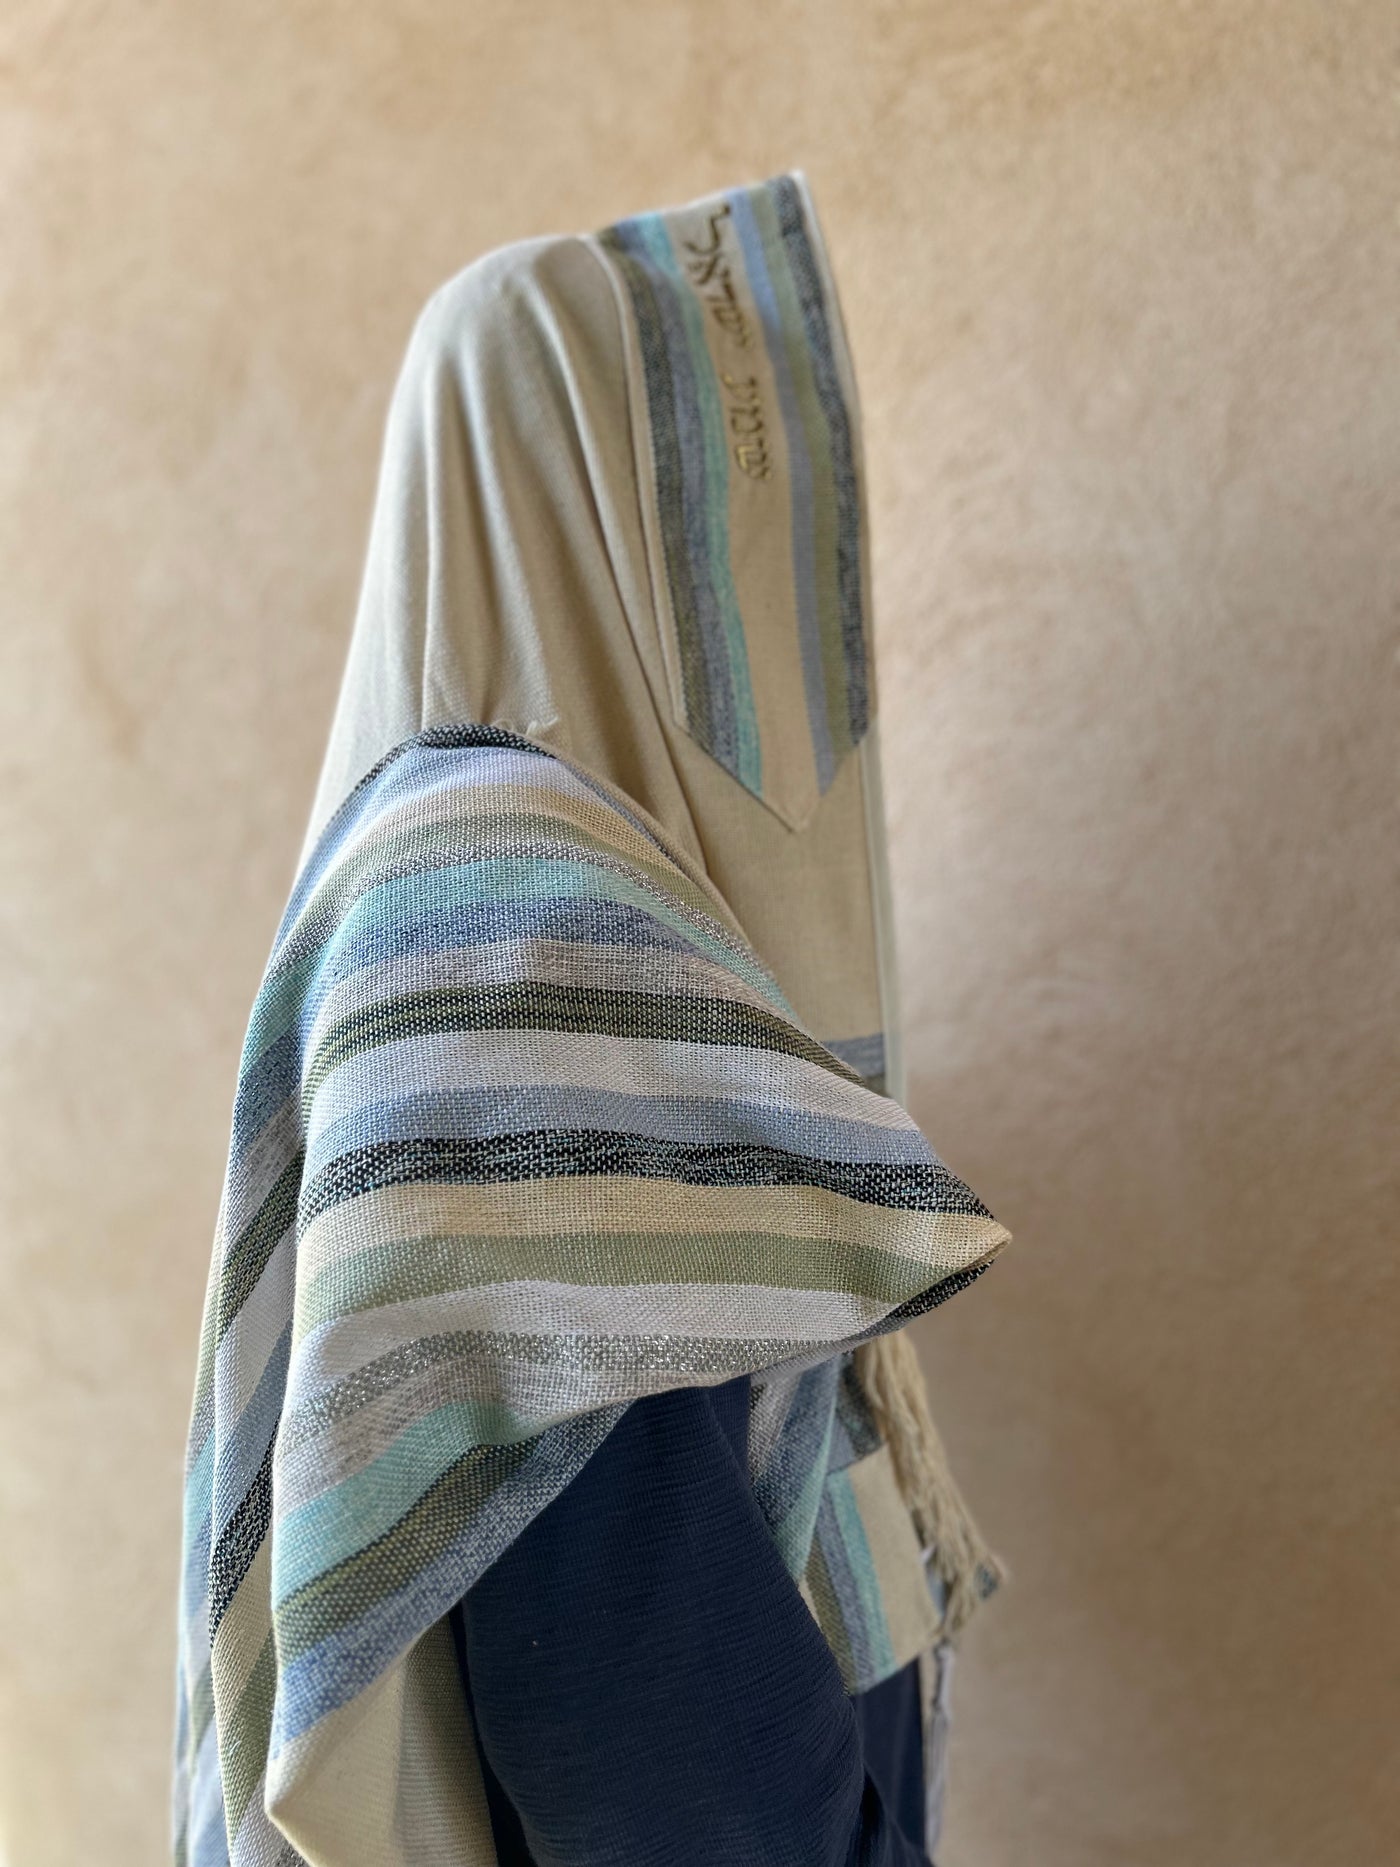 Prayer Shawl, Judaica, Tallit, Jewish, Custom Tallit, Woven Tallit, Cotton Tallit, Tallit Man, Talis, Blue Prayer Shawl, High Holidays